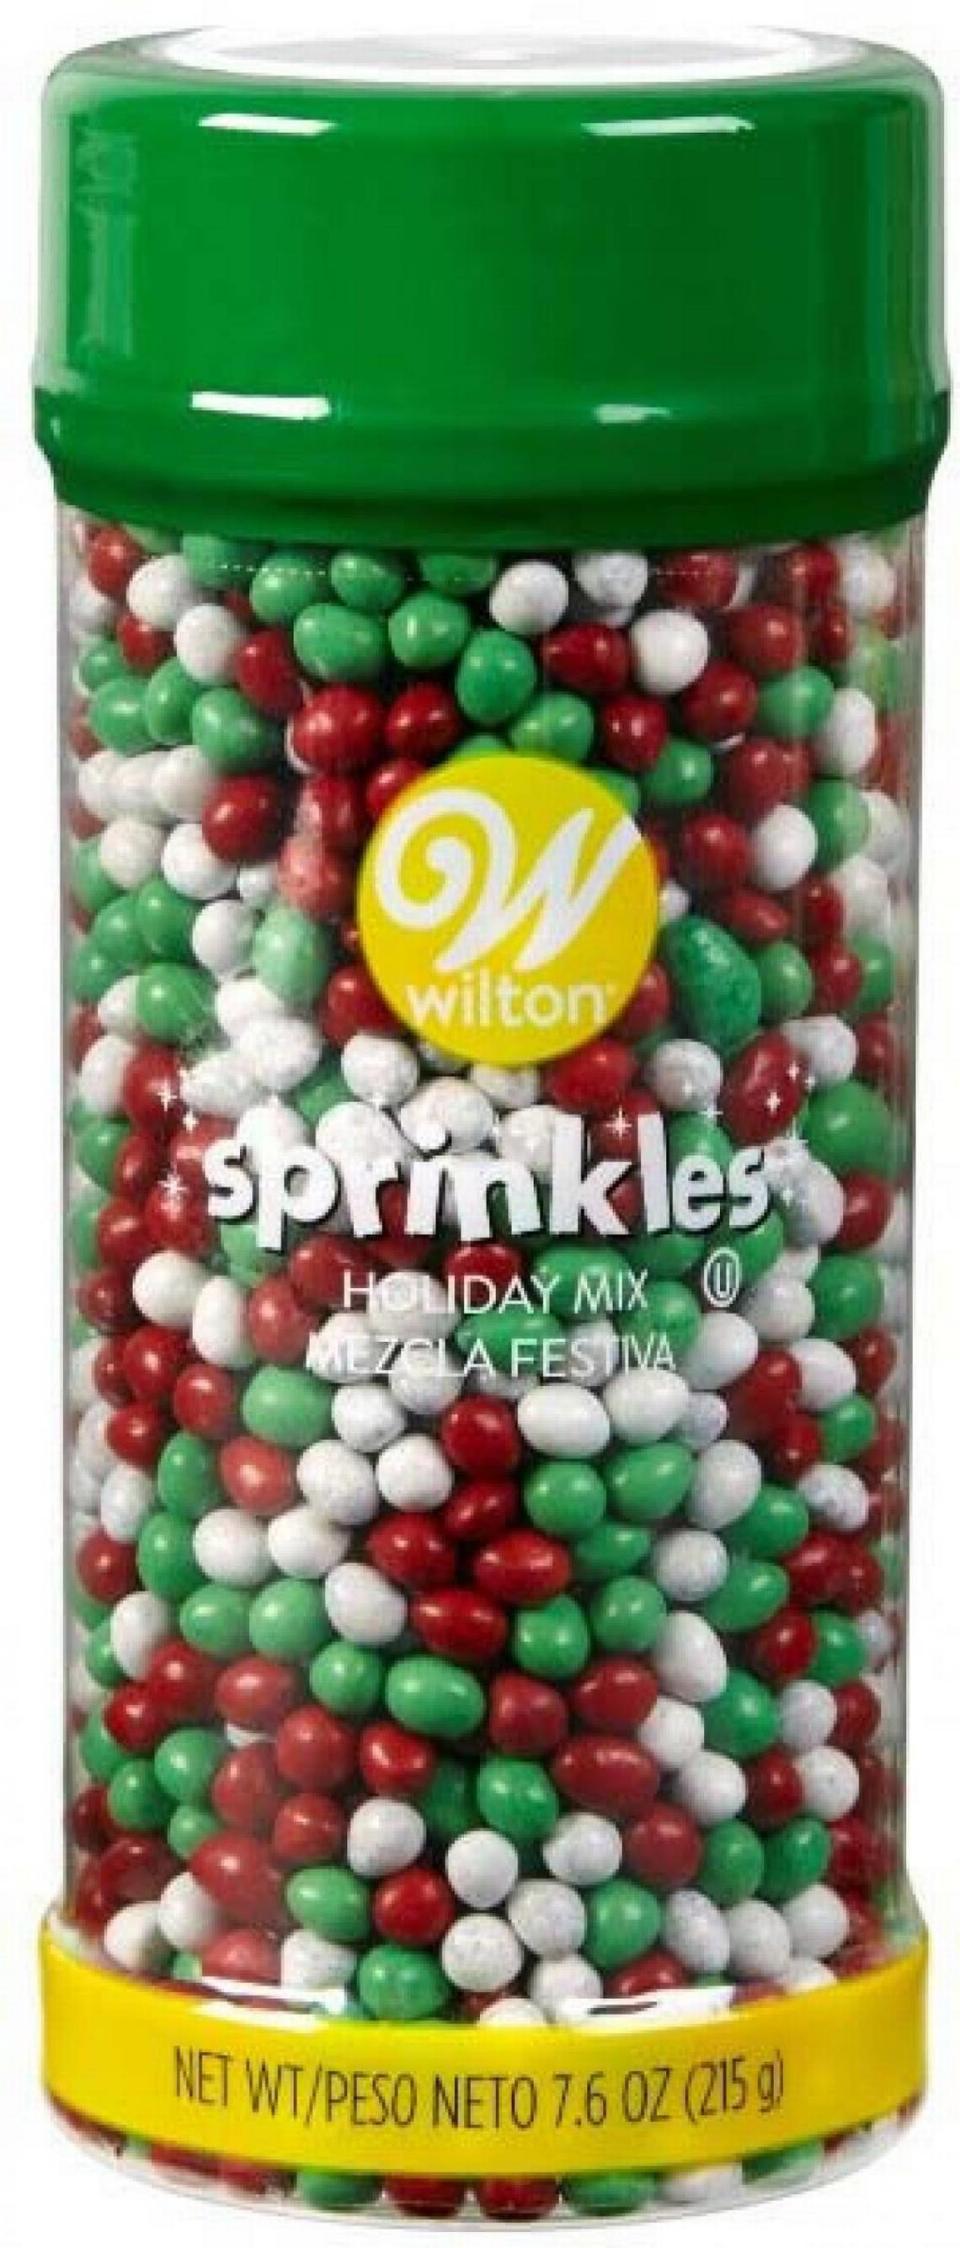 Wilton Sprinkles Holiday Mix